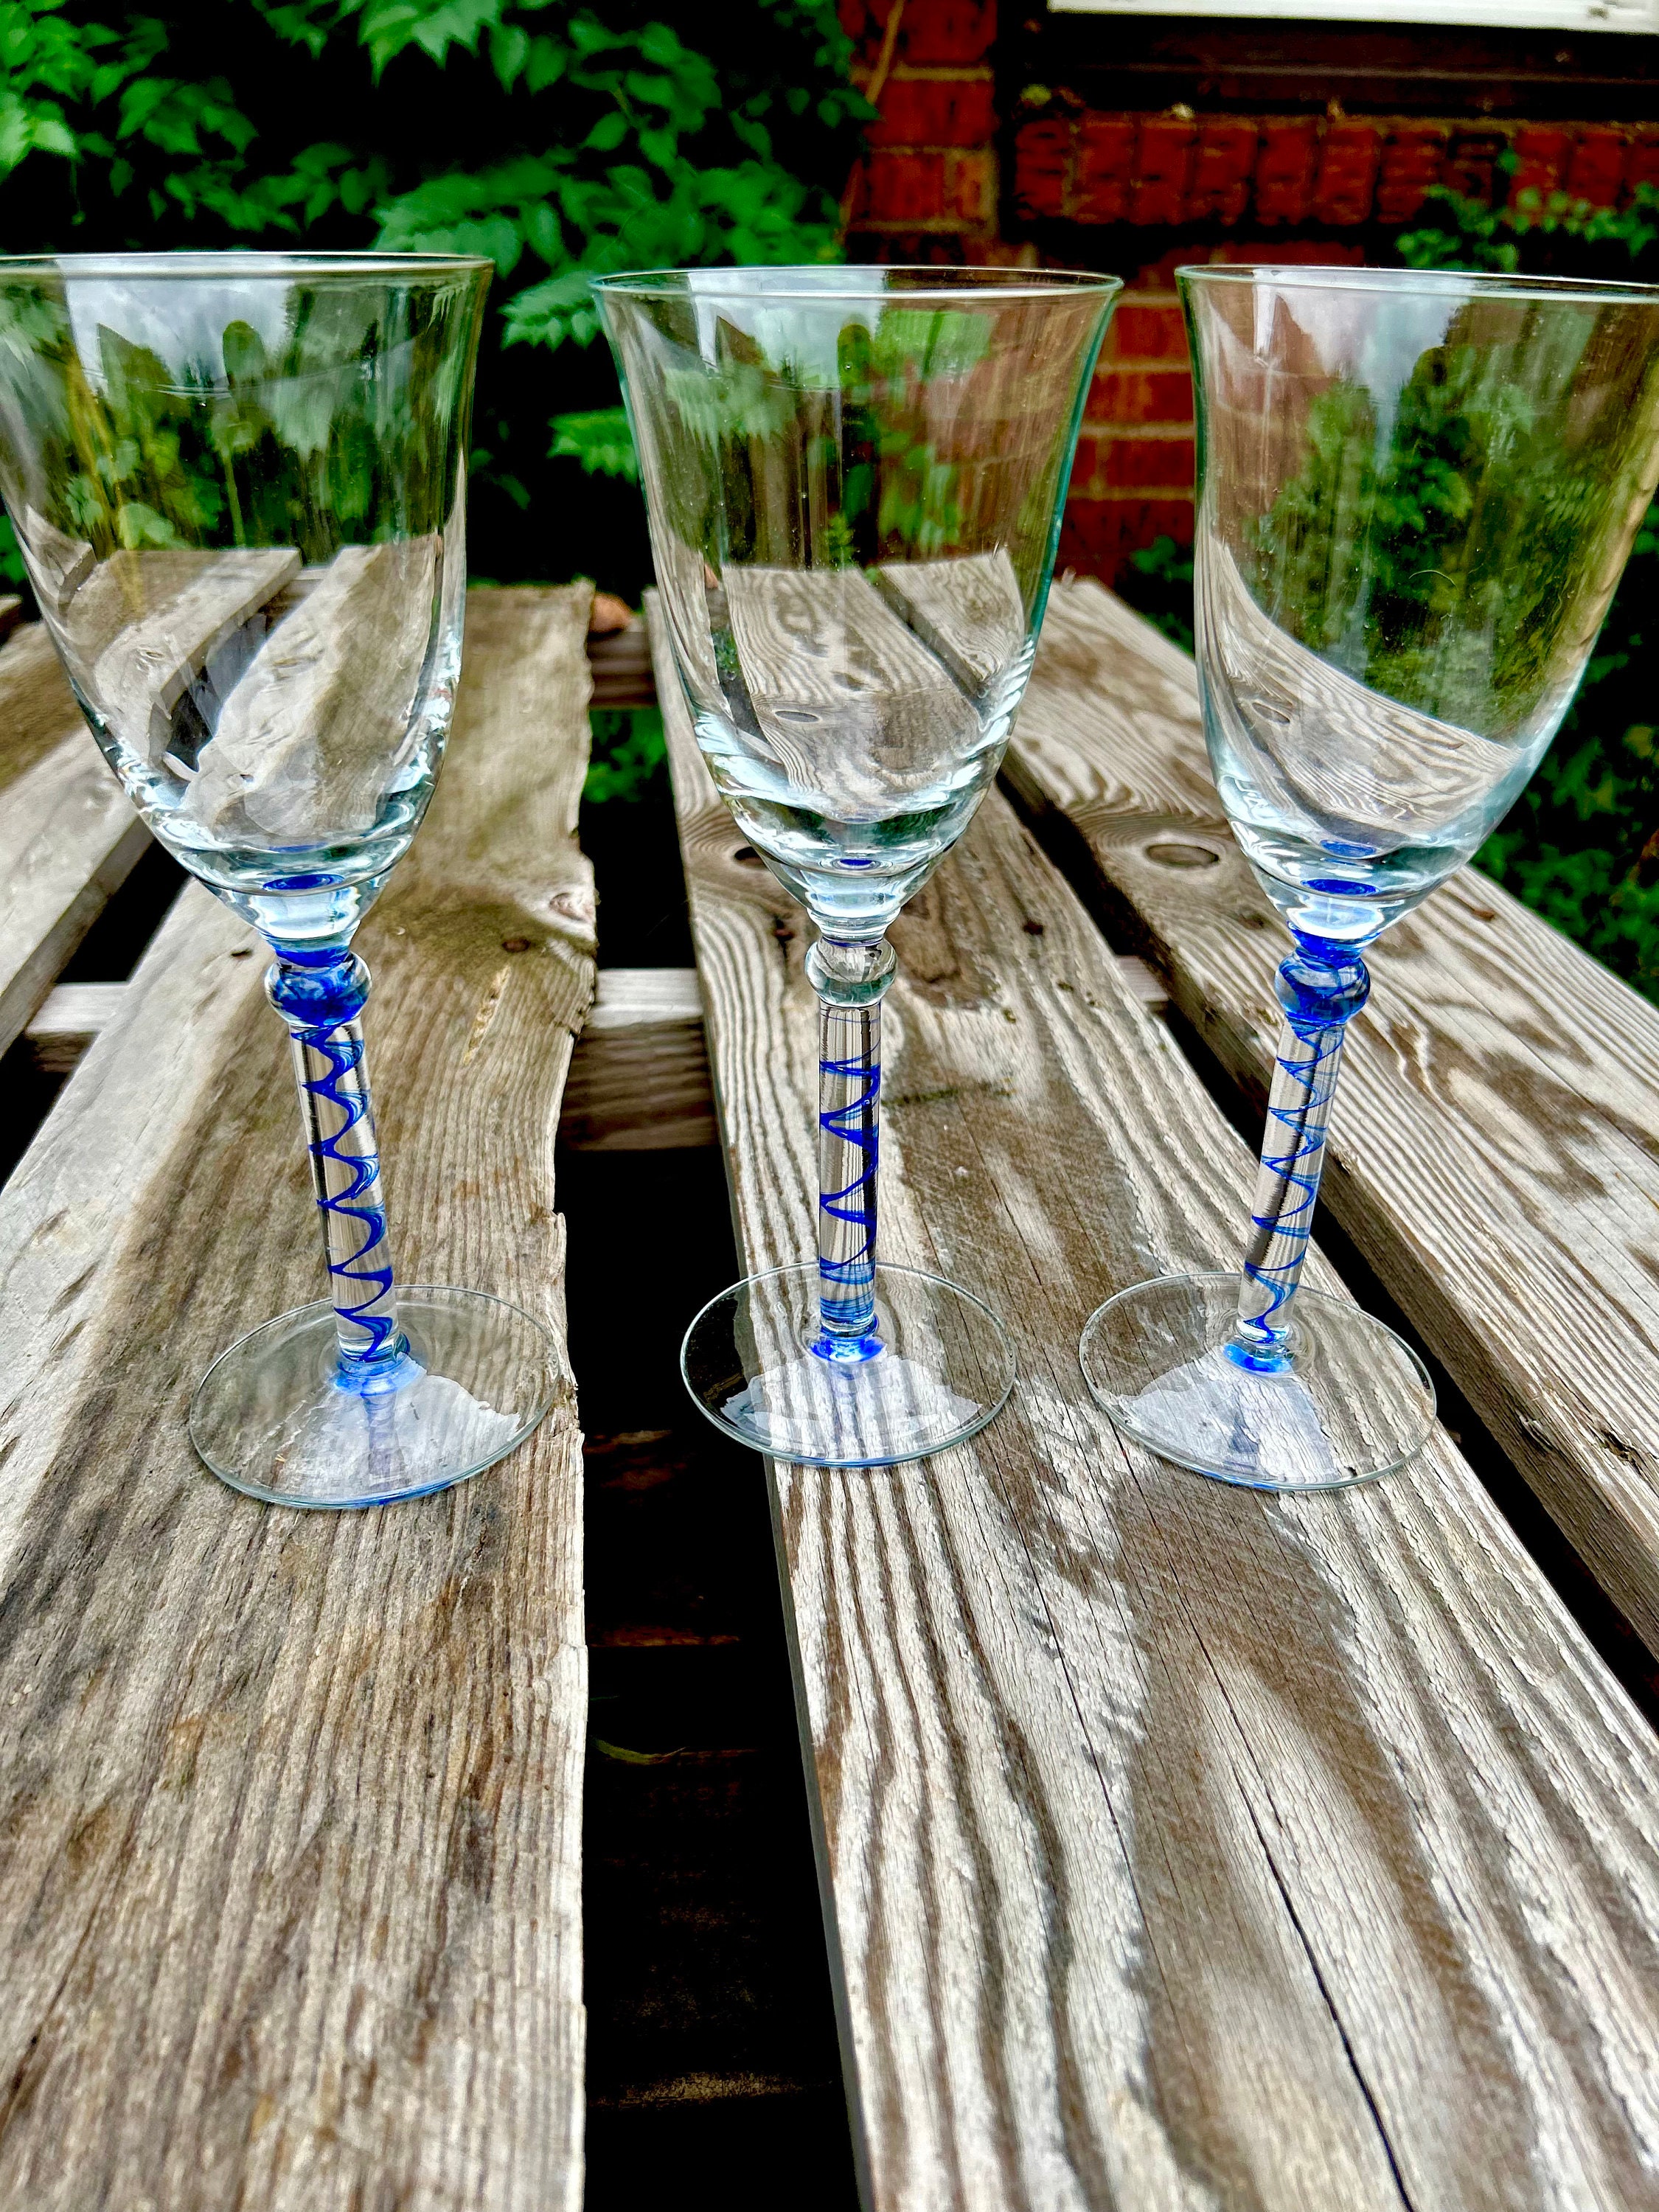 Swirl White Wine Glasses - Set of 2pc in a gift box – Julianna Glass